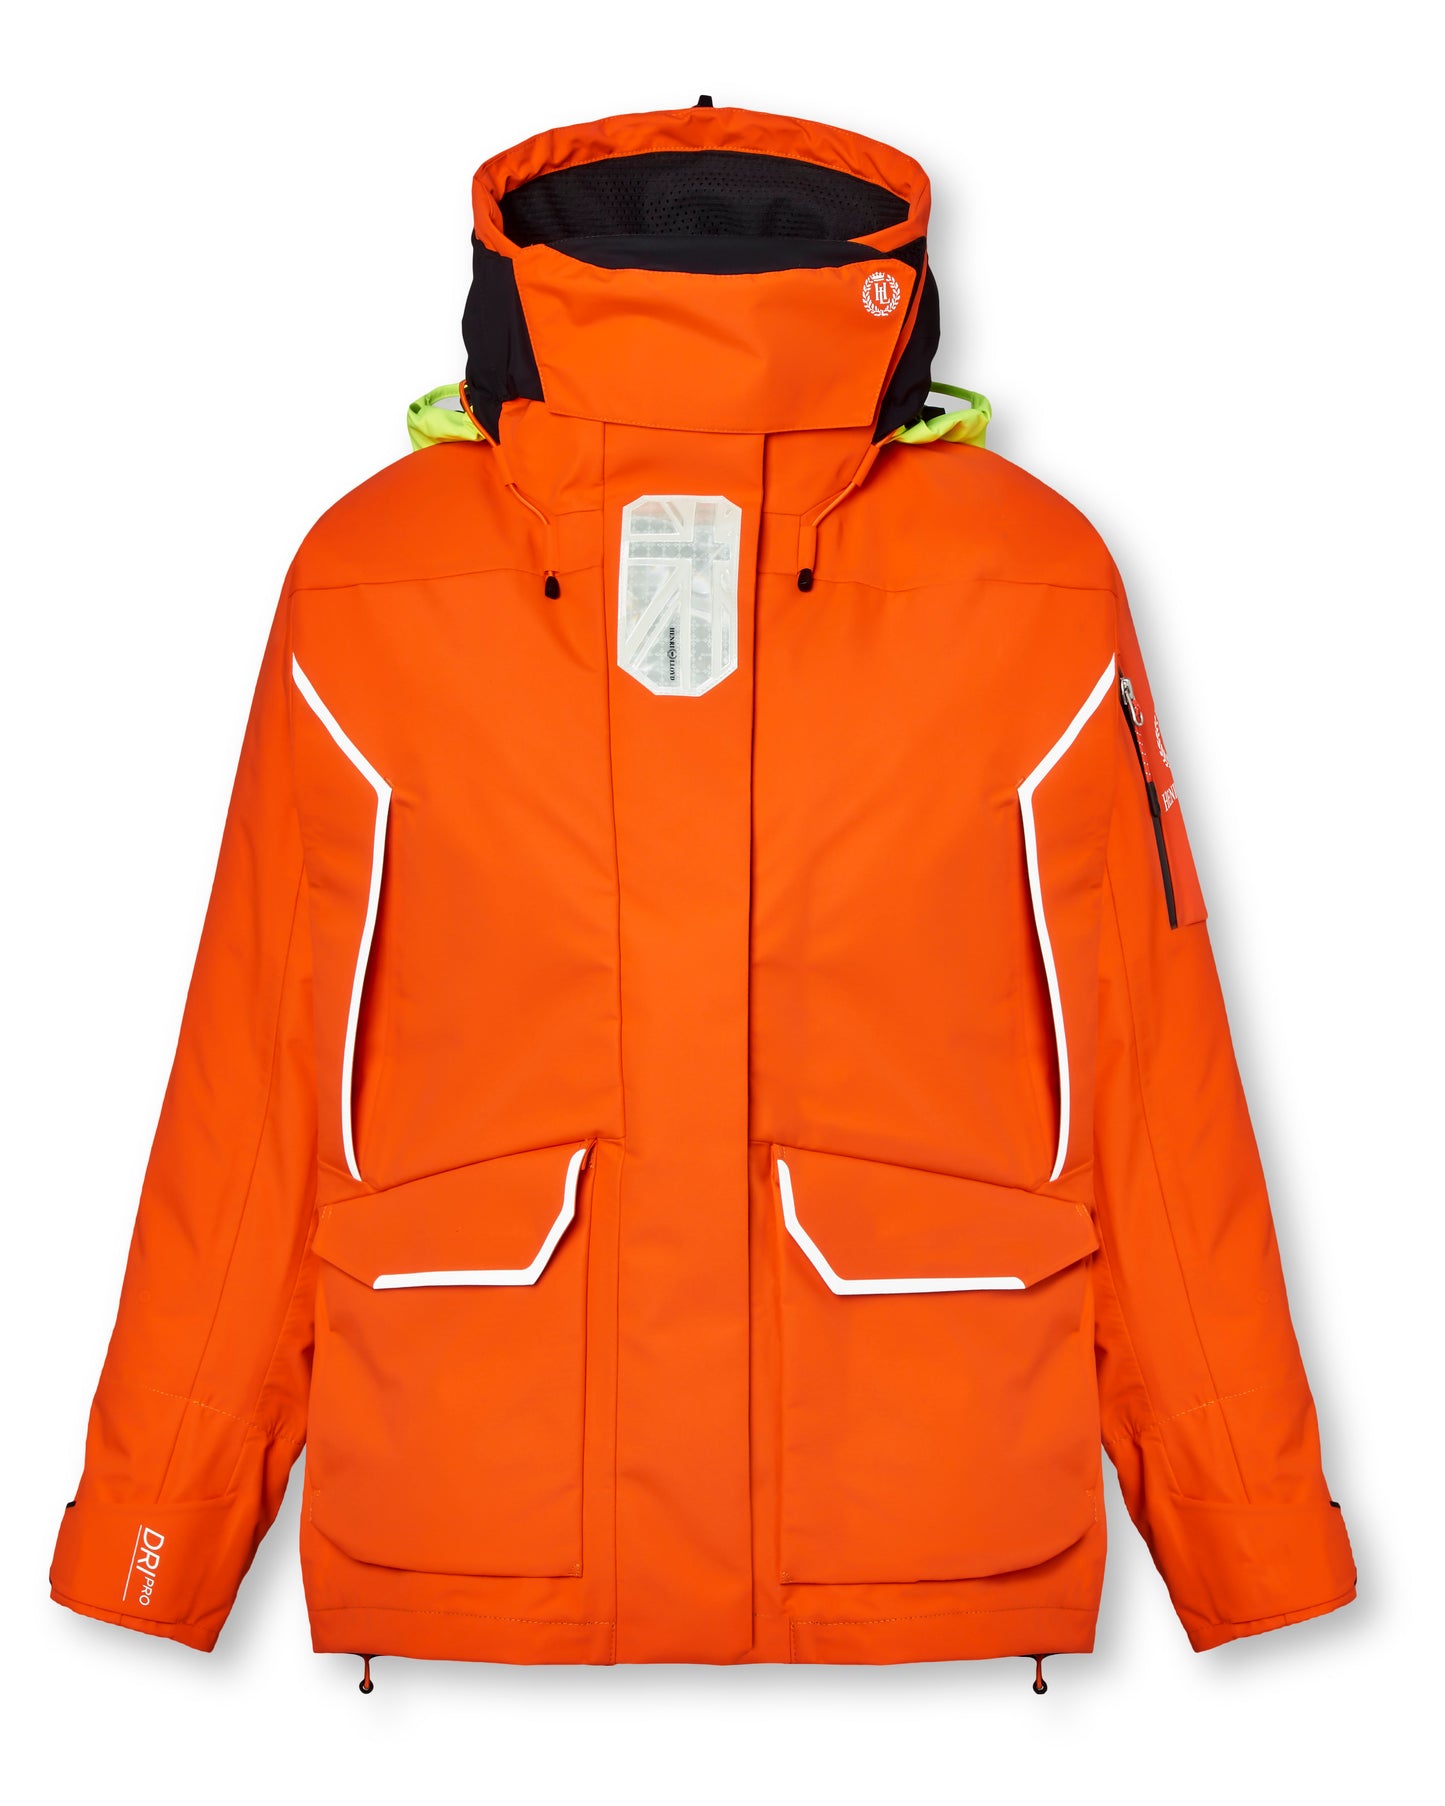 Women's Elite Jacket - Power Orange